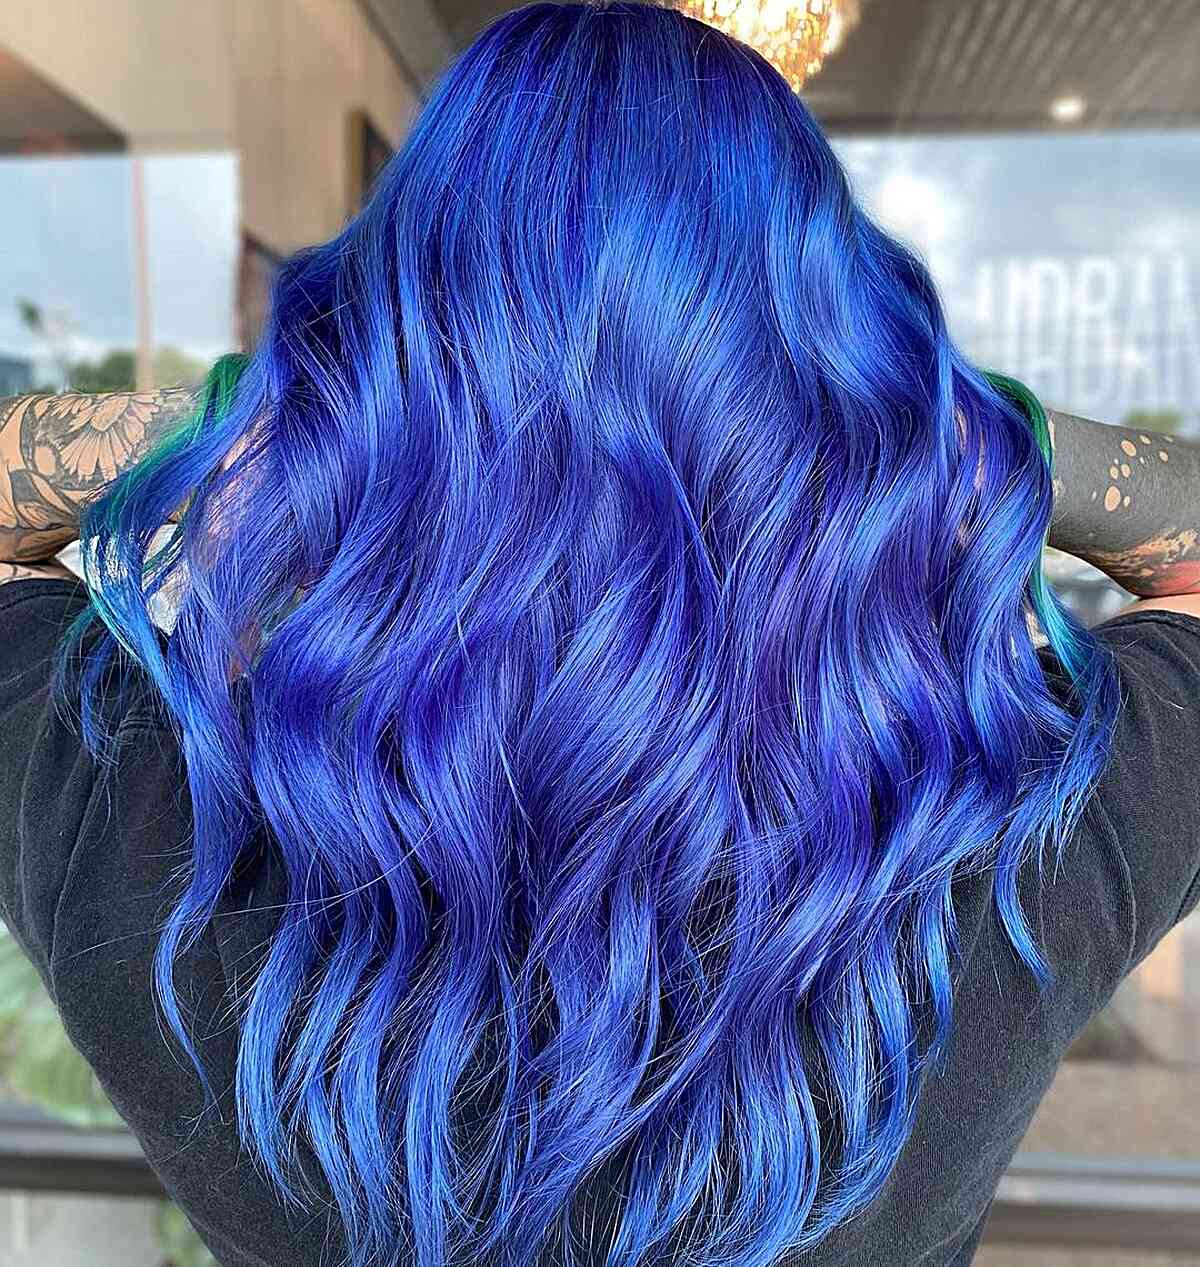 Vivid Blue-Purple Waves for women with longer hair